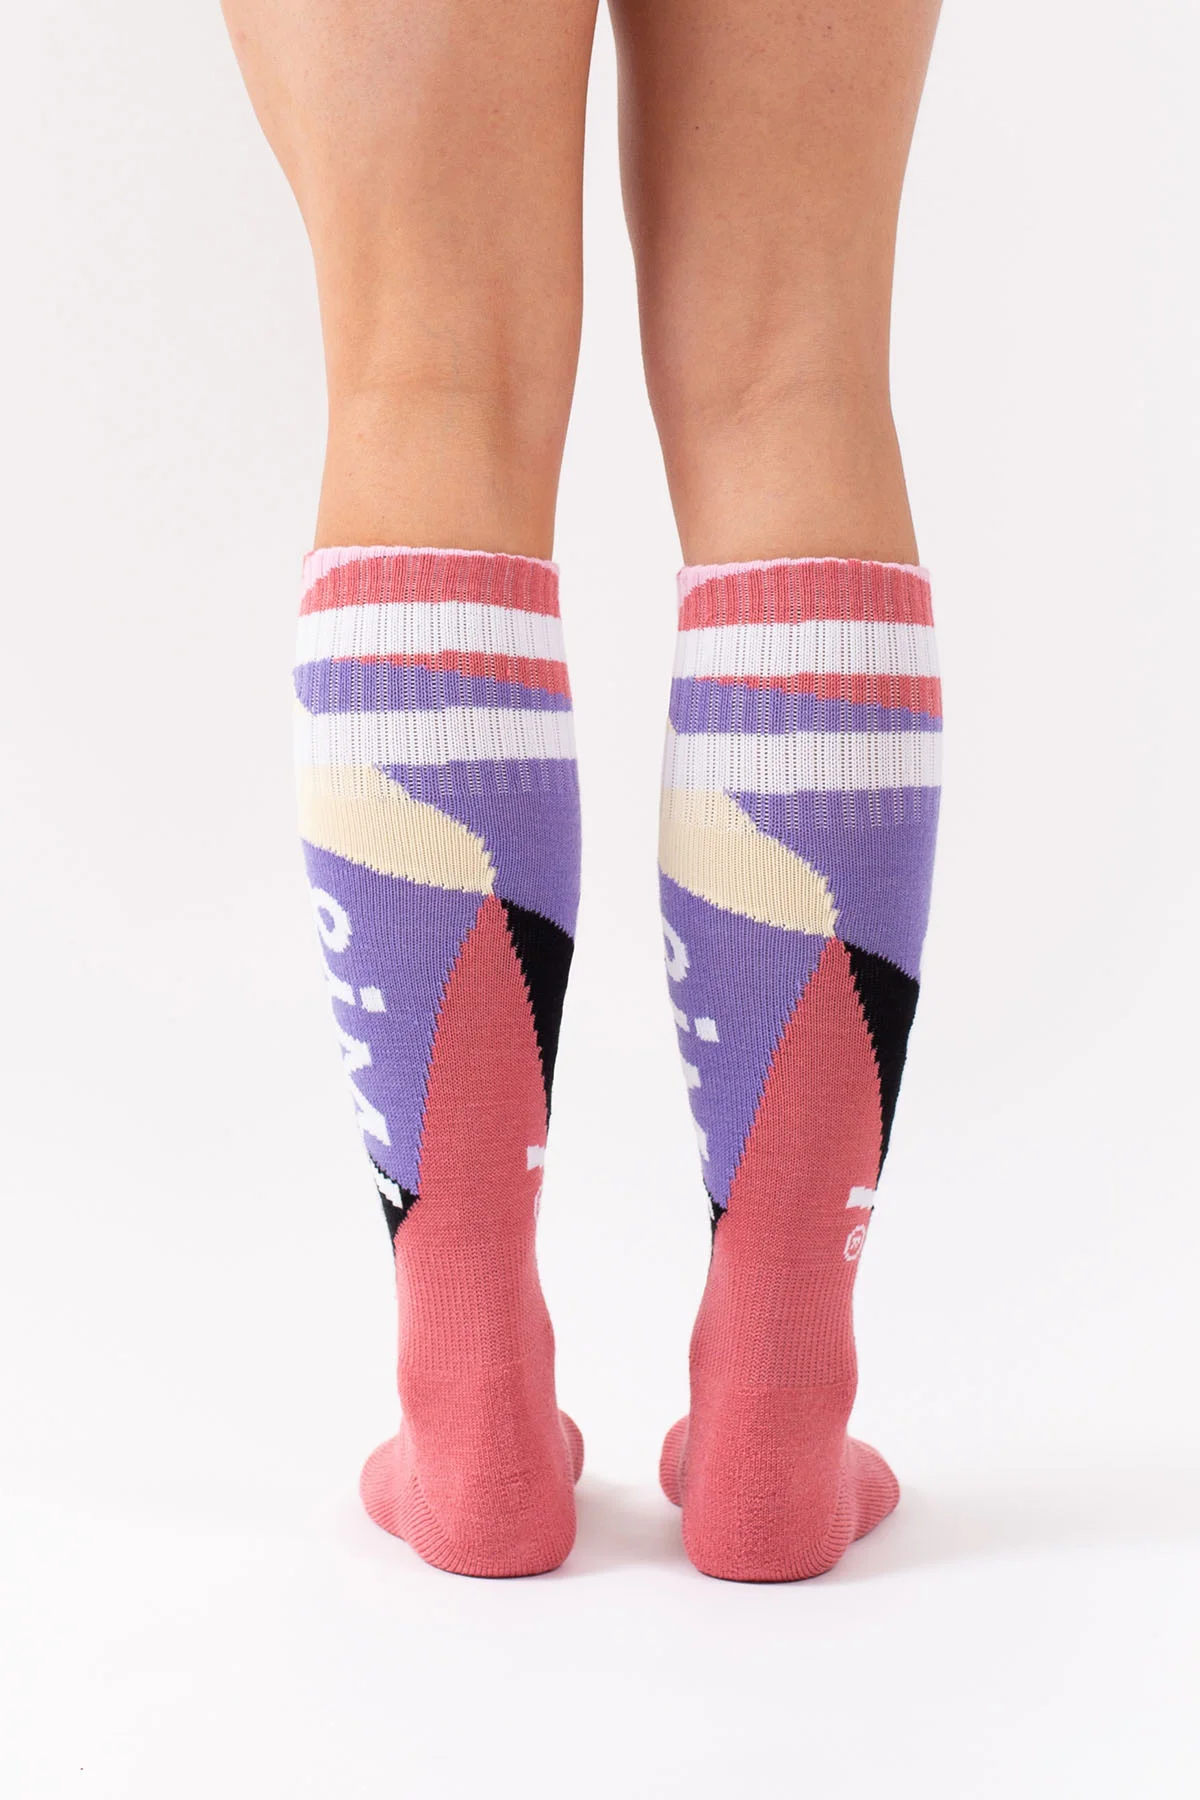 Cheerleader Wool Socks - Abstract Shapes | 5.5-7.5